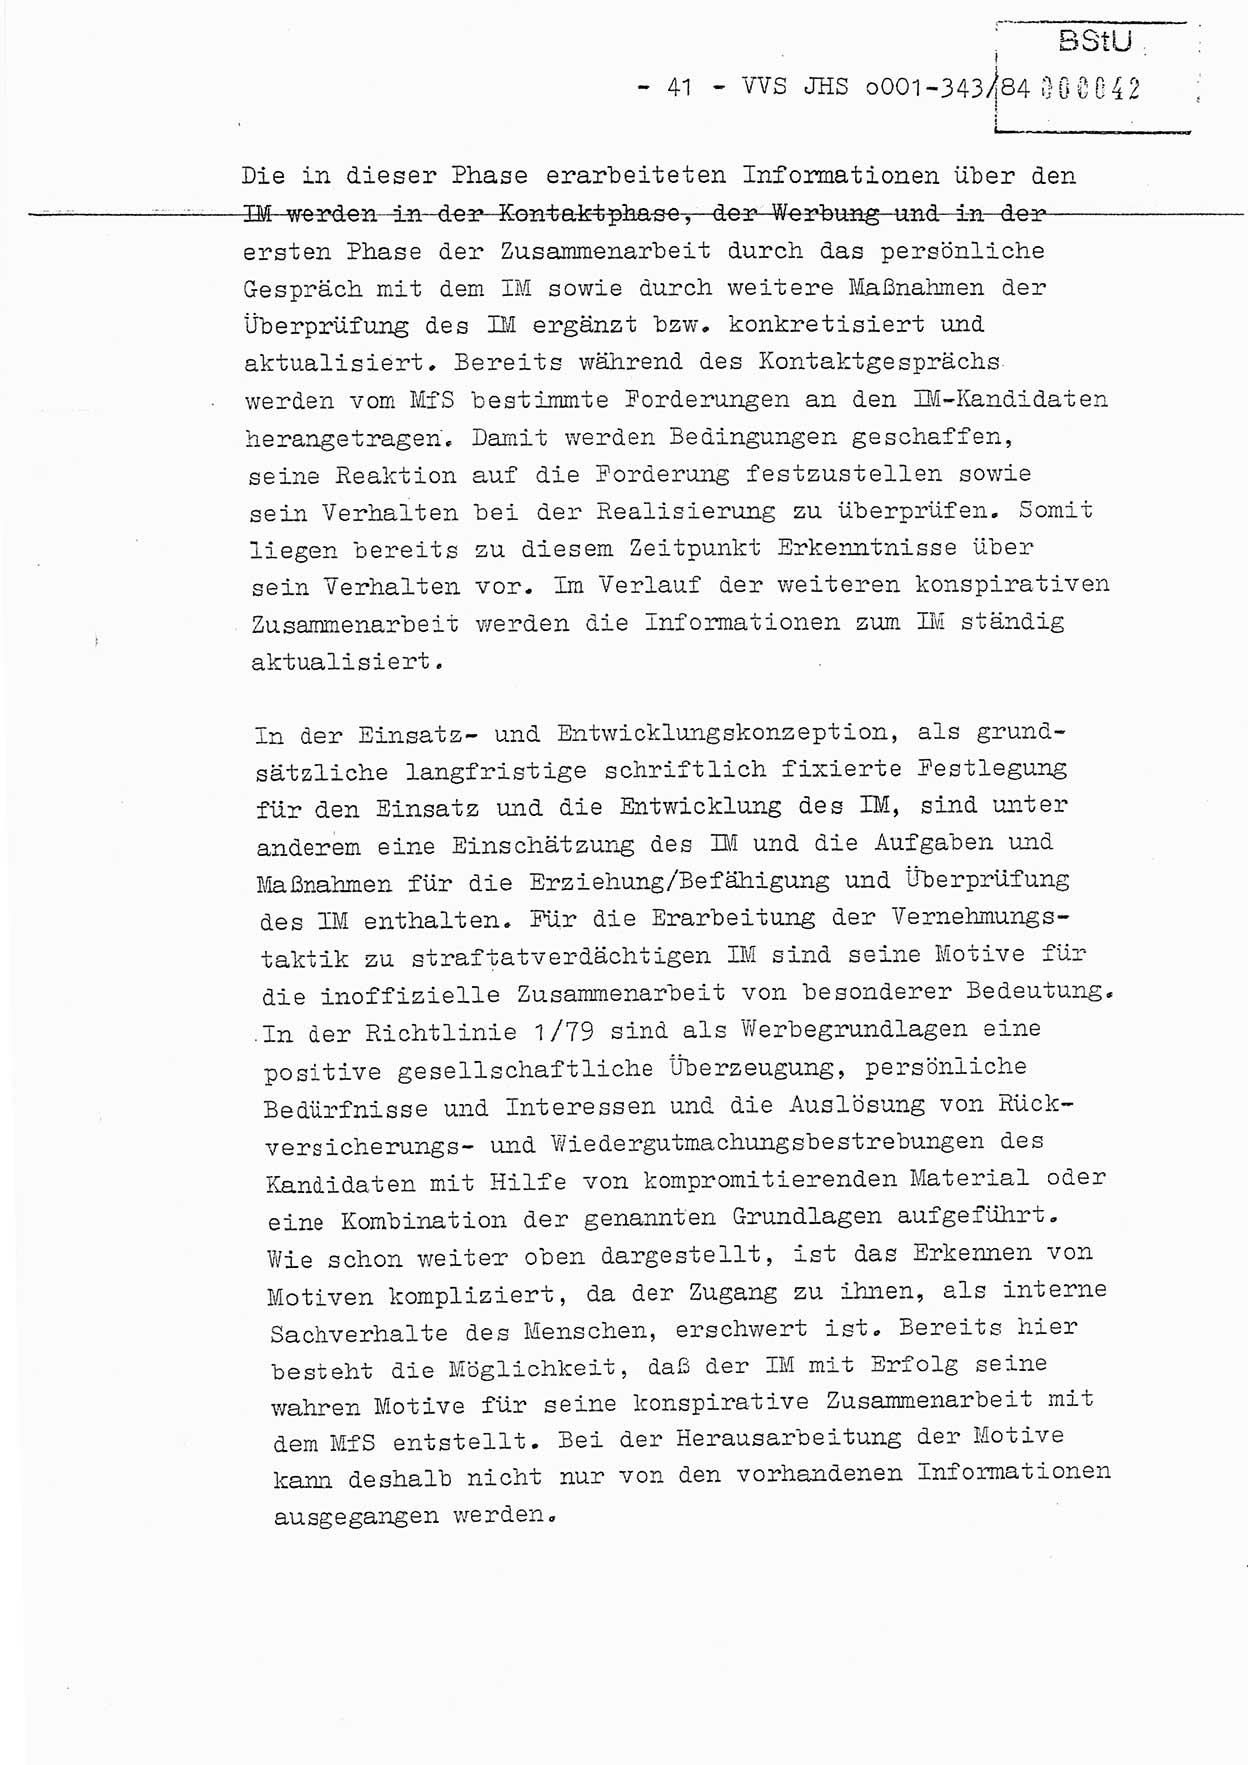 Diplomarbeit, Oberleutnant Bernd Michael (HA Ⅸ/5), Oberleutnant Peter Felber (HA IX/5), Ministerium für Staatssicherheit (MfS) [Deutsche Demokratische Republik (DDR)], Juristische Hochschule (JHS), Vertrauliche Verschlußsache (VVS) o001-343/84, Potsdam 1985, Seite 41 (Dipl.-Arb. MfS DDR JHS VVS o001-343/84 1985, S. 41)